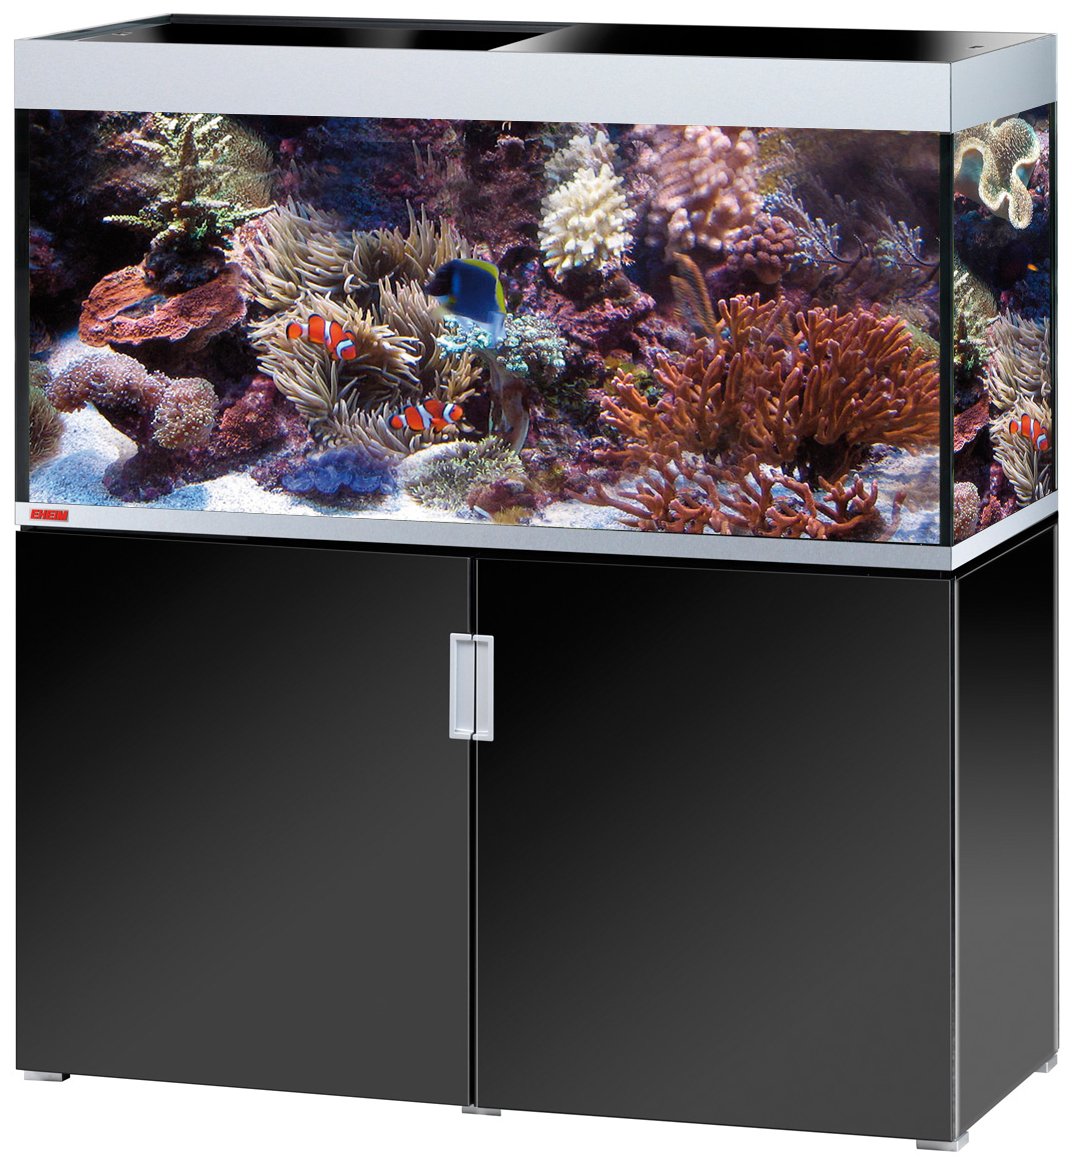 eheim-incpiria-marine-400-led-noir-brillant-argent-kit-aquarium-130-cm-400-l-avec-meuble-et-eclairage-leds